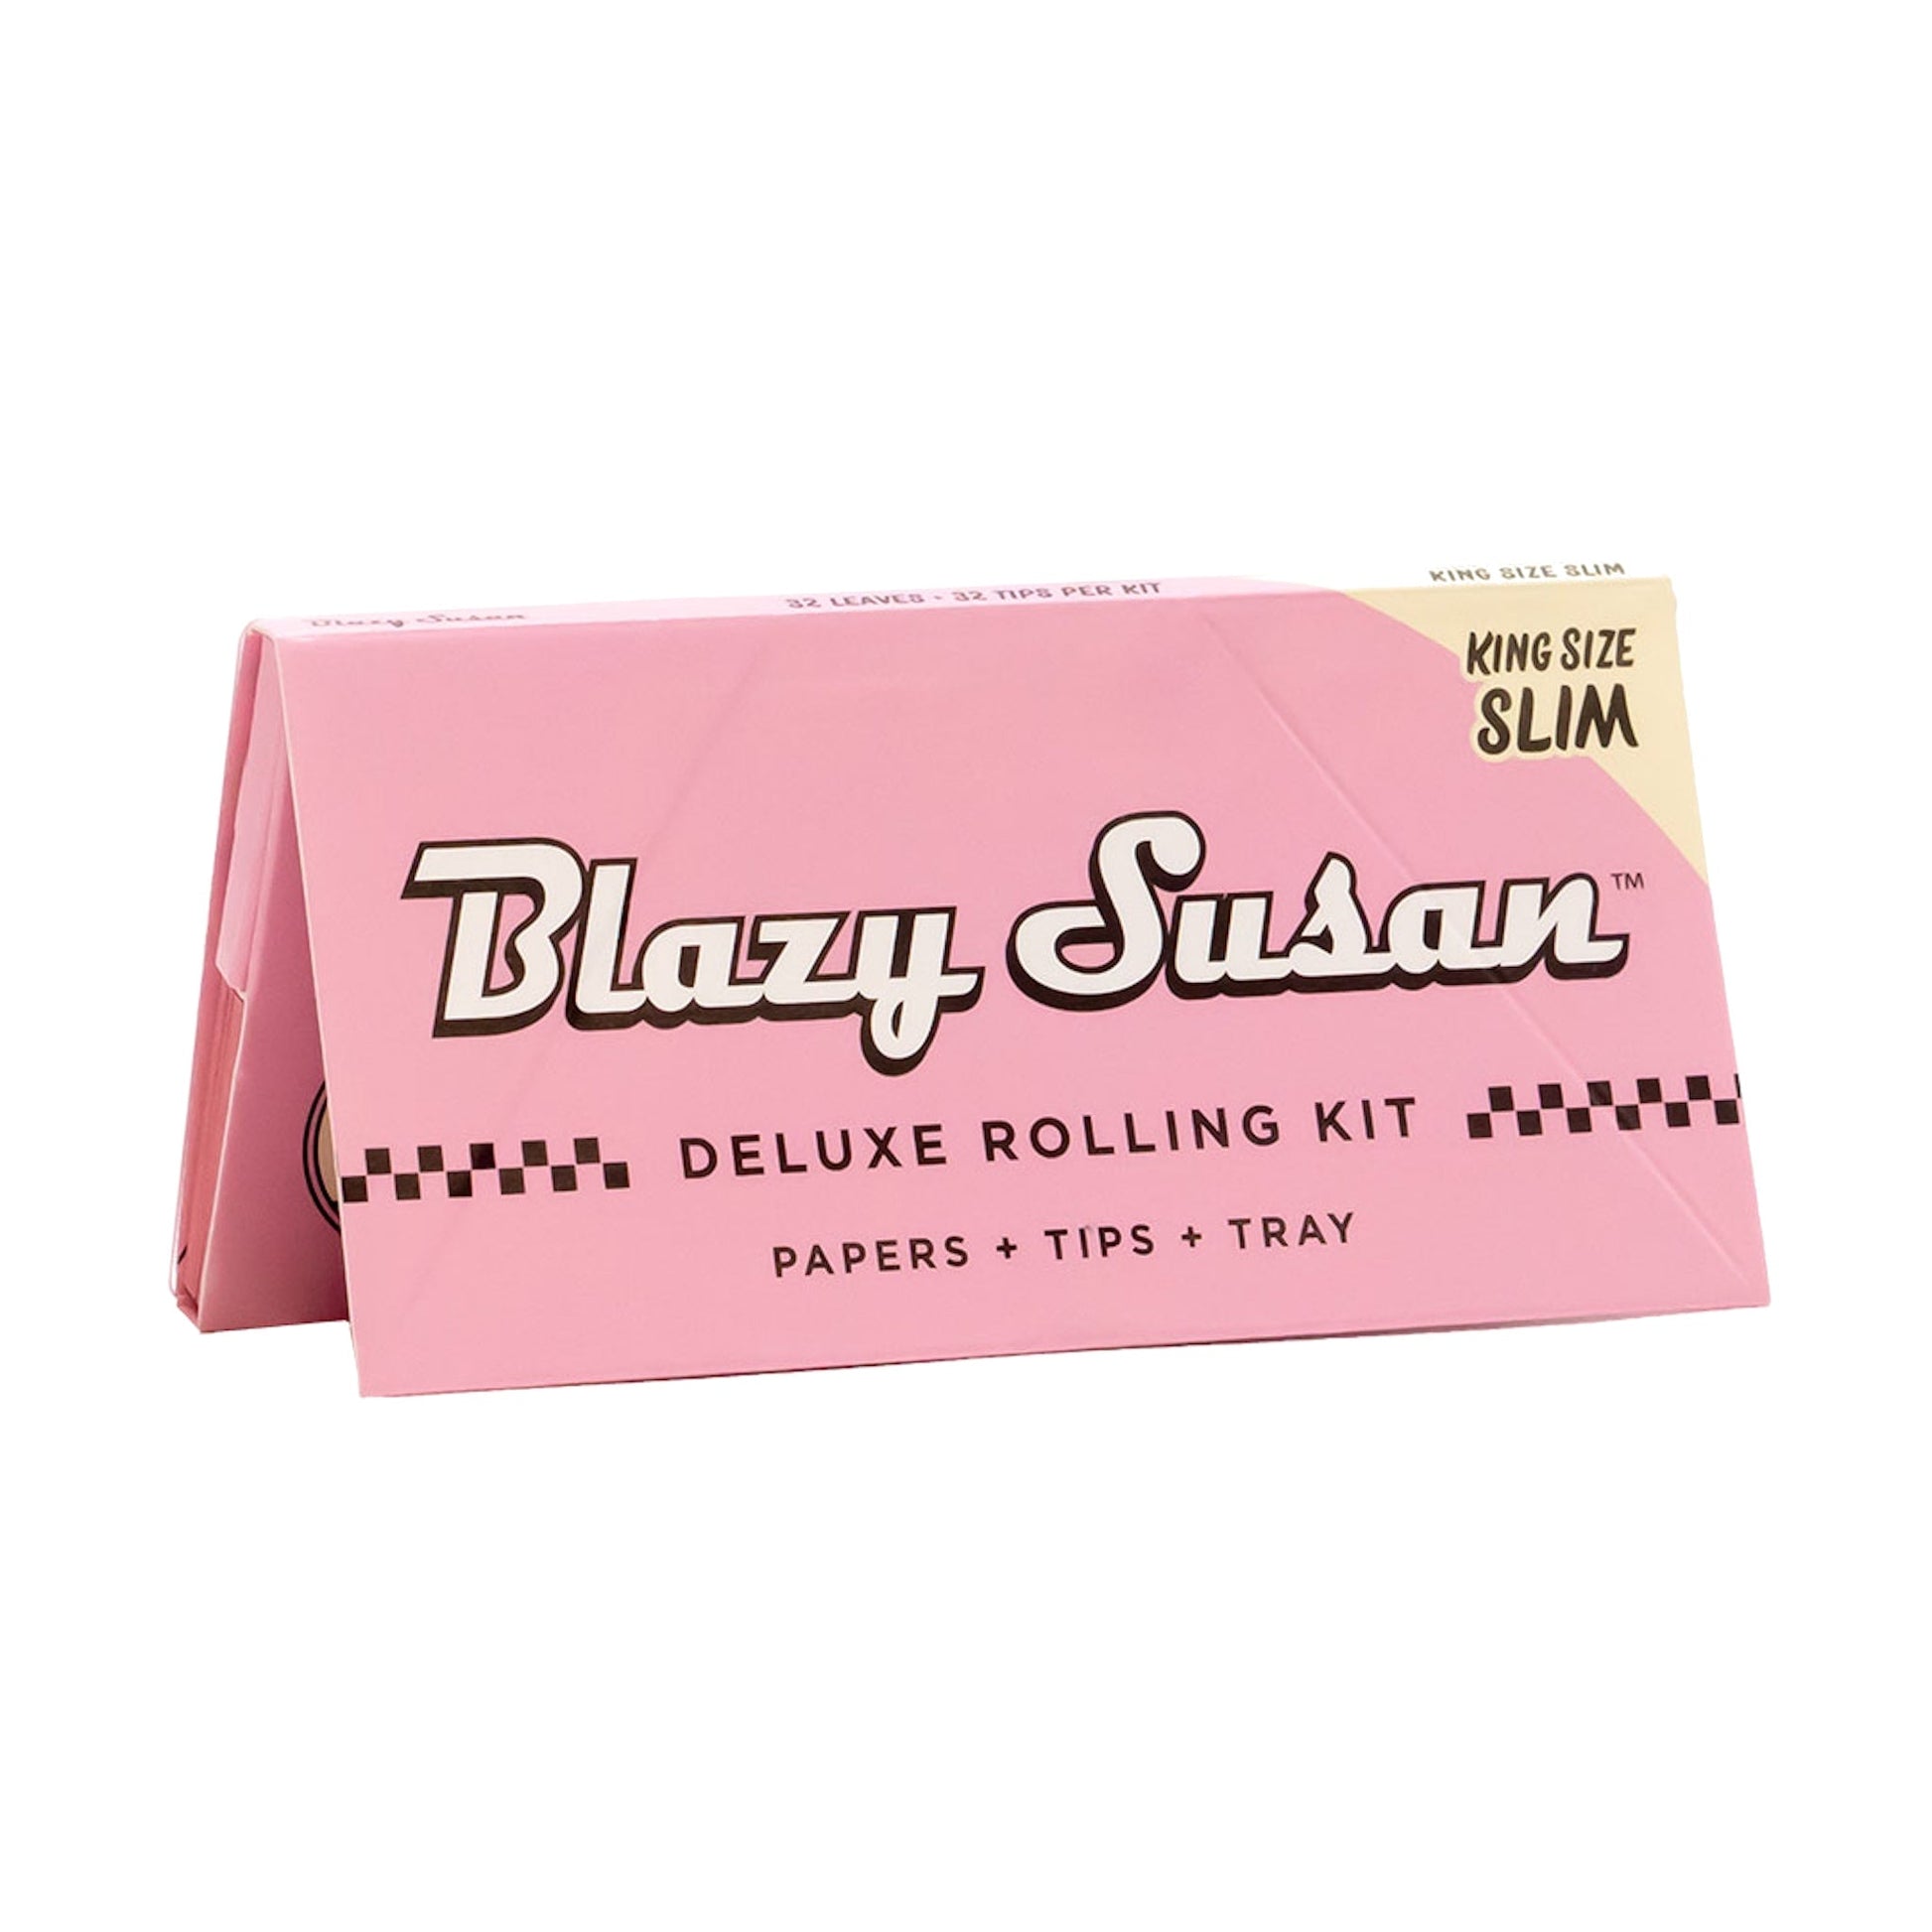 Blazy Susan Deluxe Rolling Kit King Size Slim